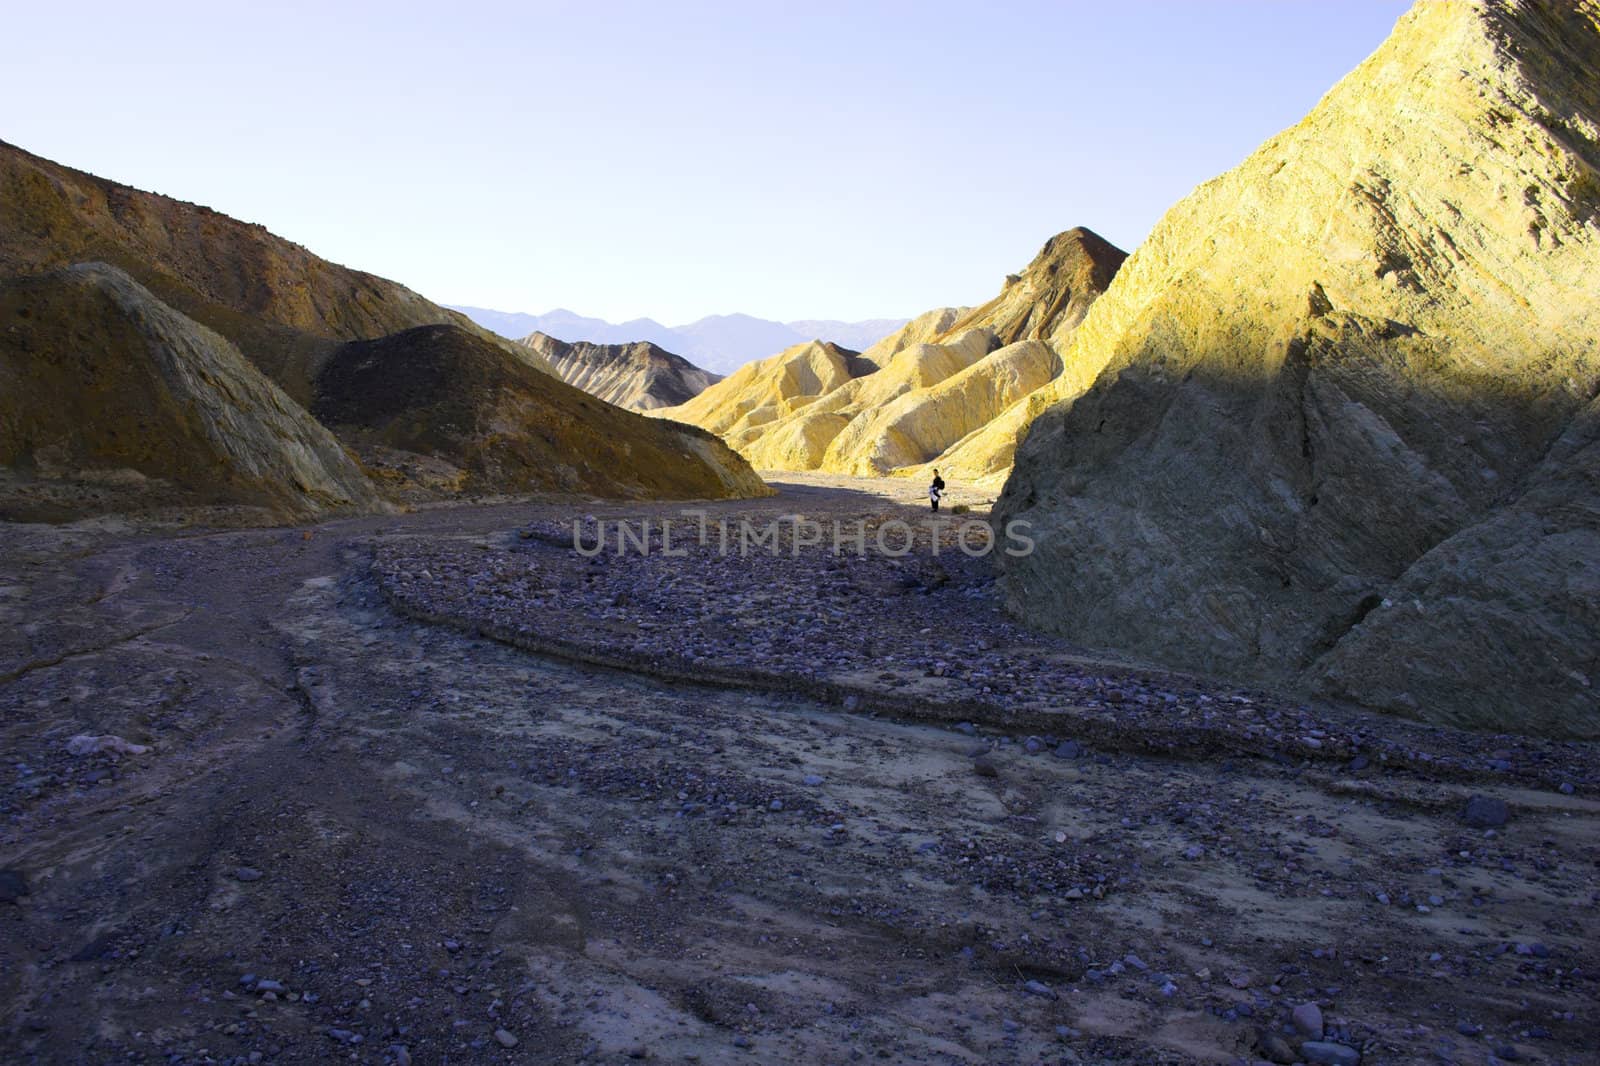 Desertscapes of Death Valley by georgeburba